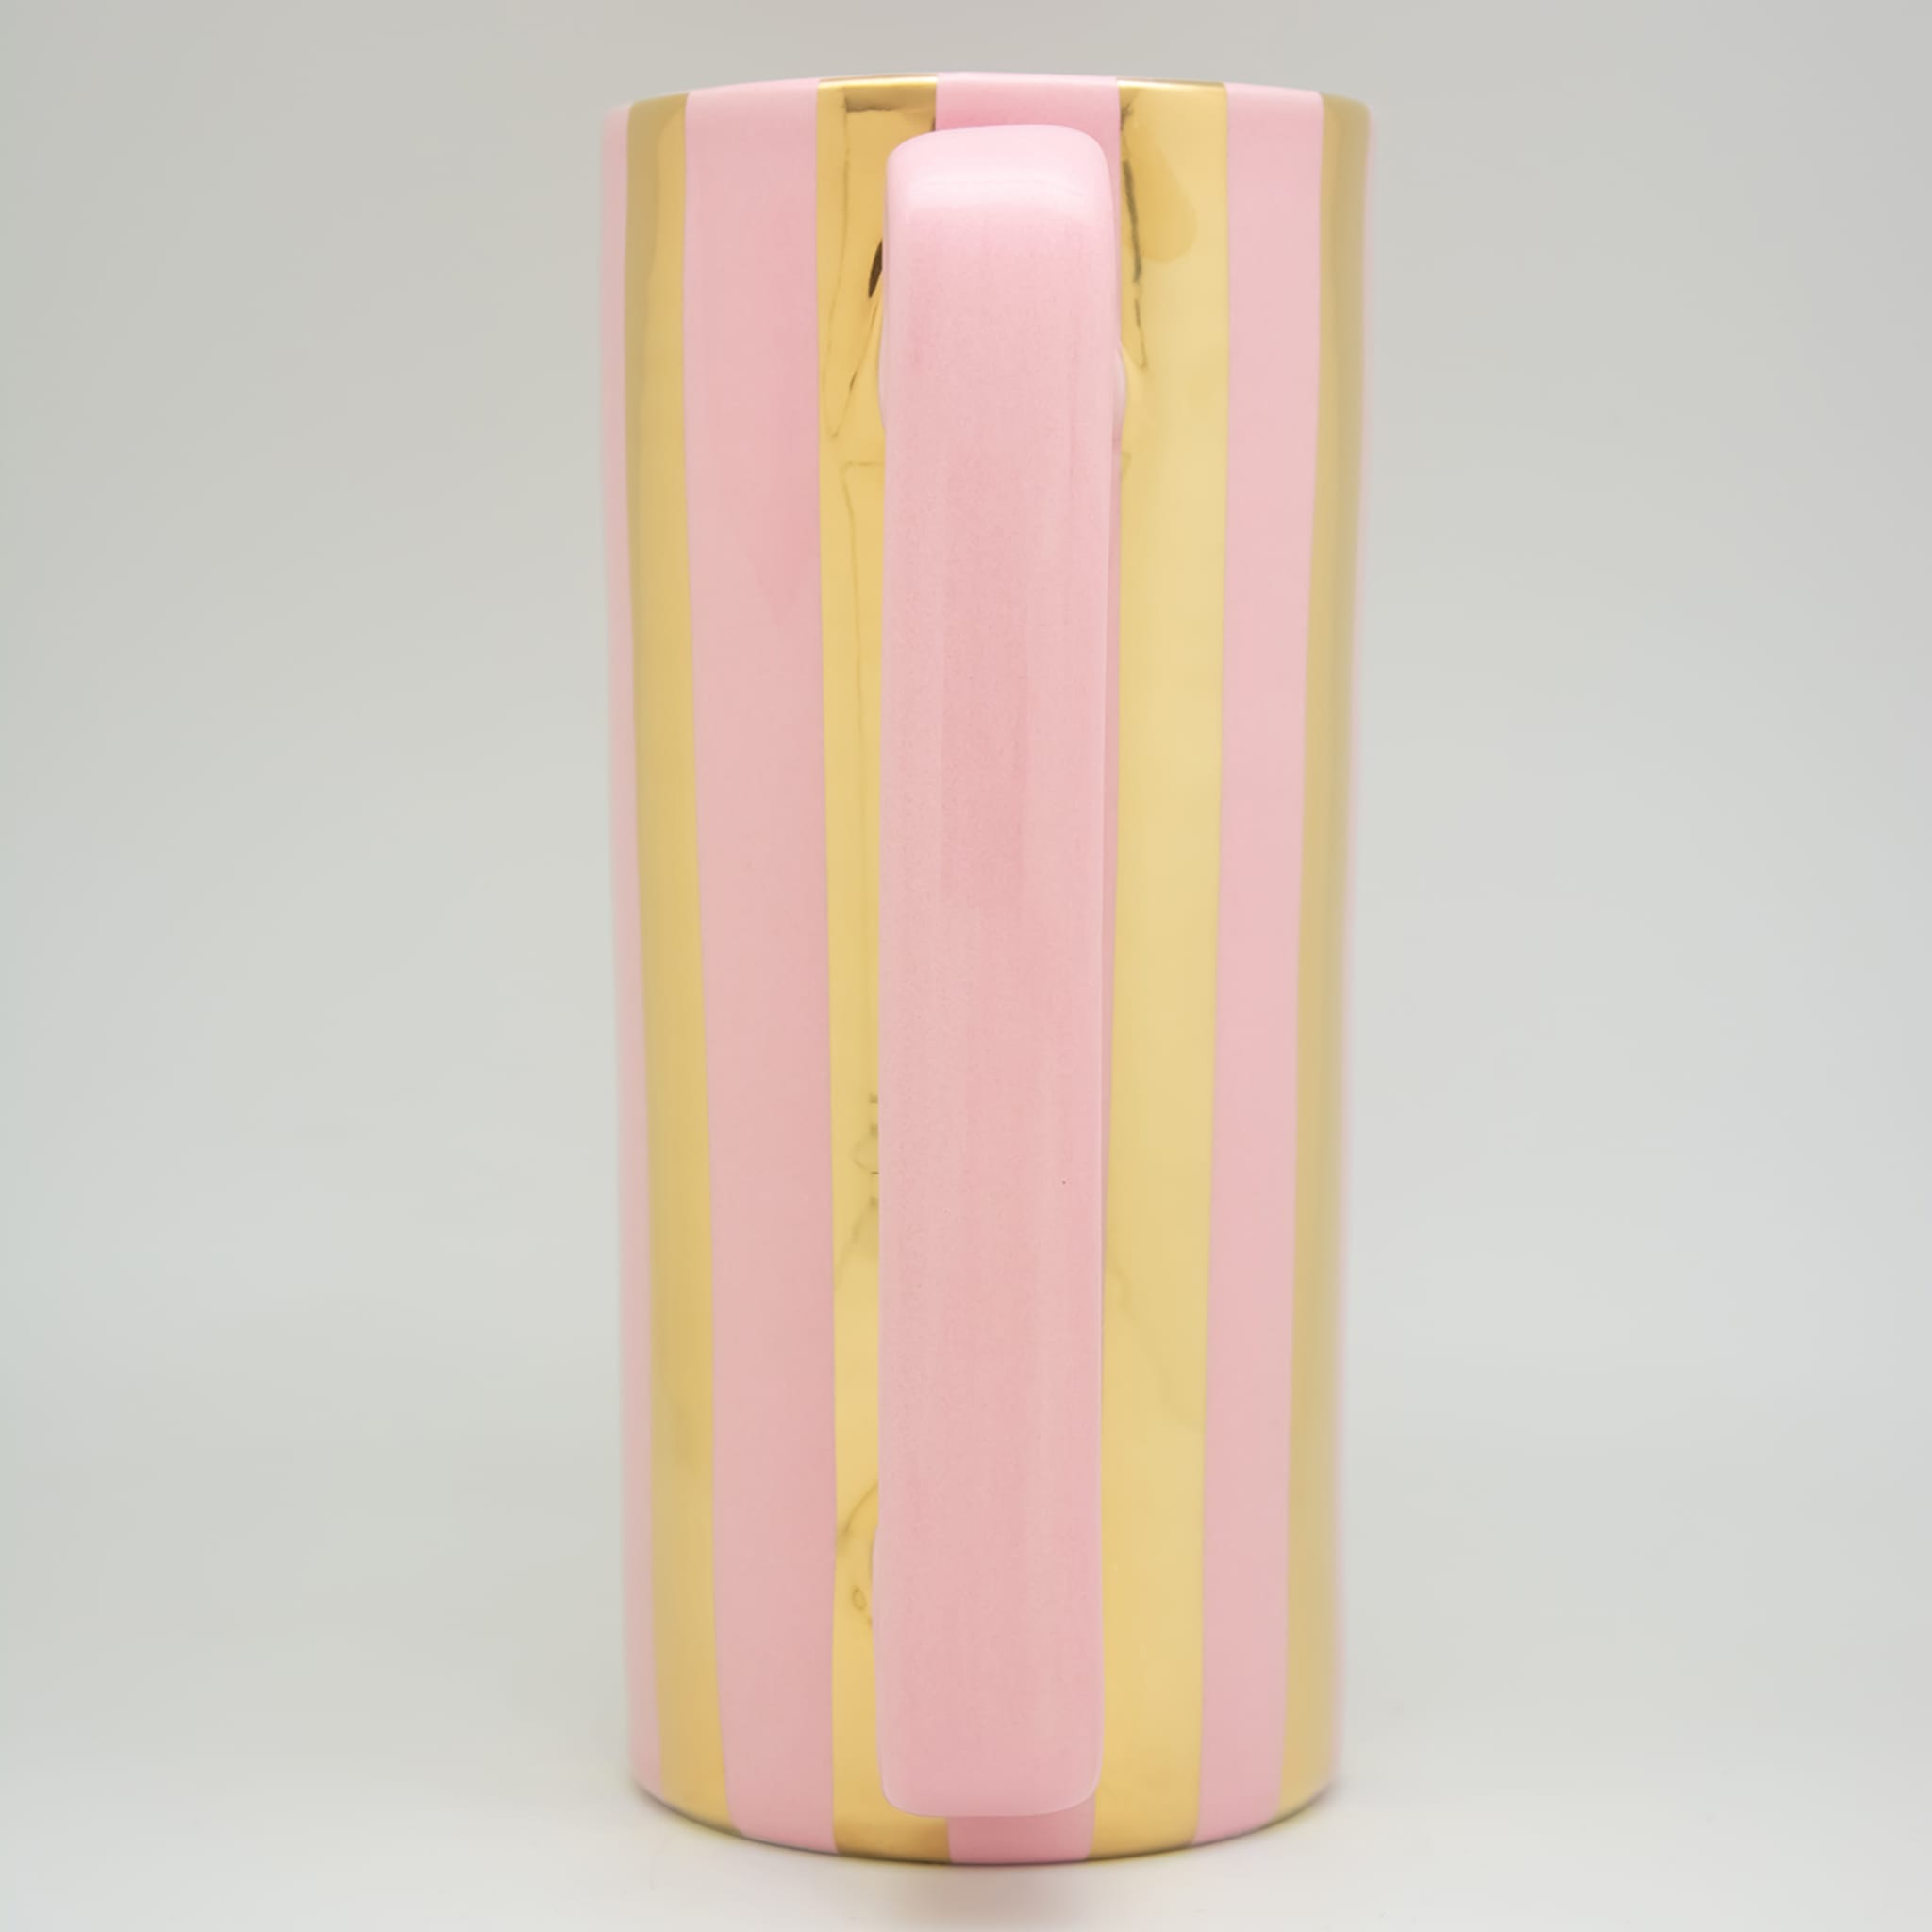 Serlio Mercante Gold 24K & Pink Carafe - Alternative view 1